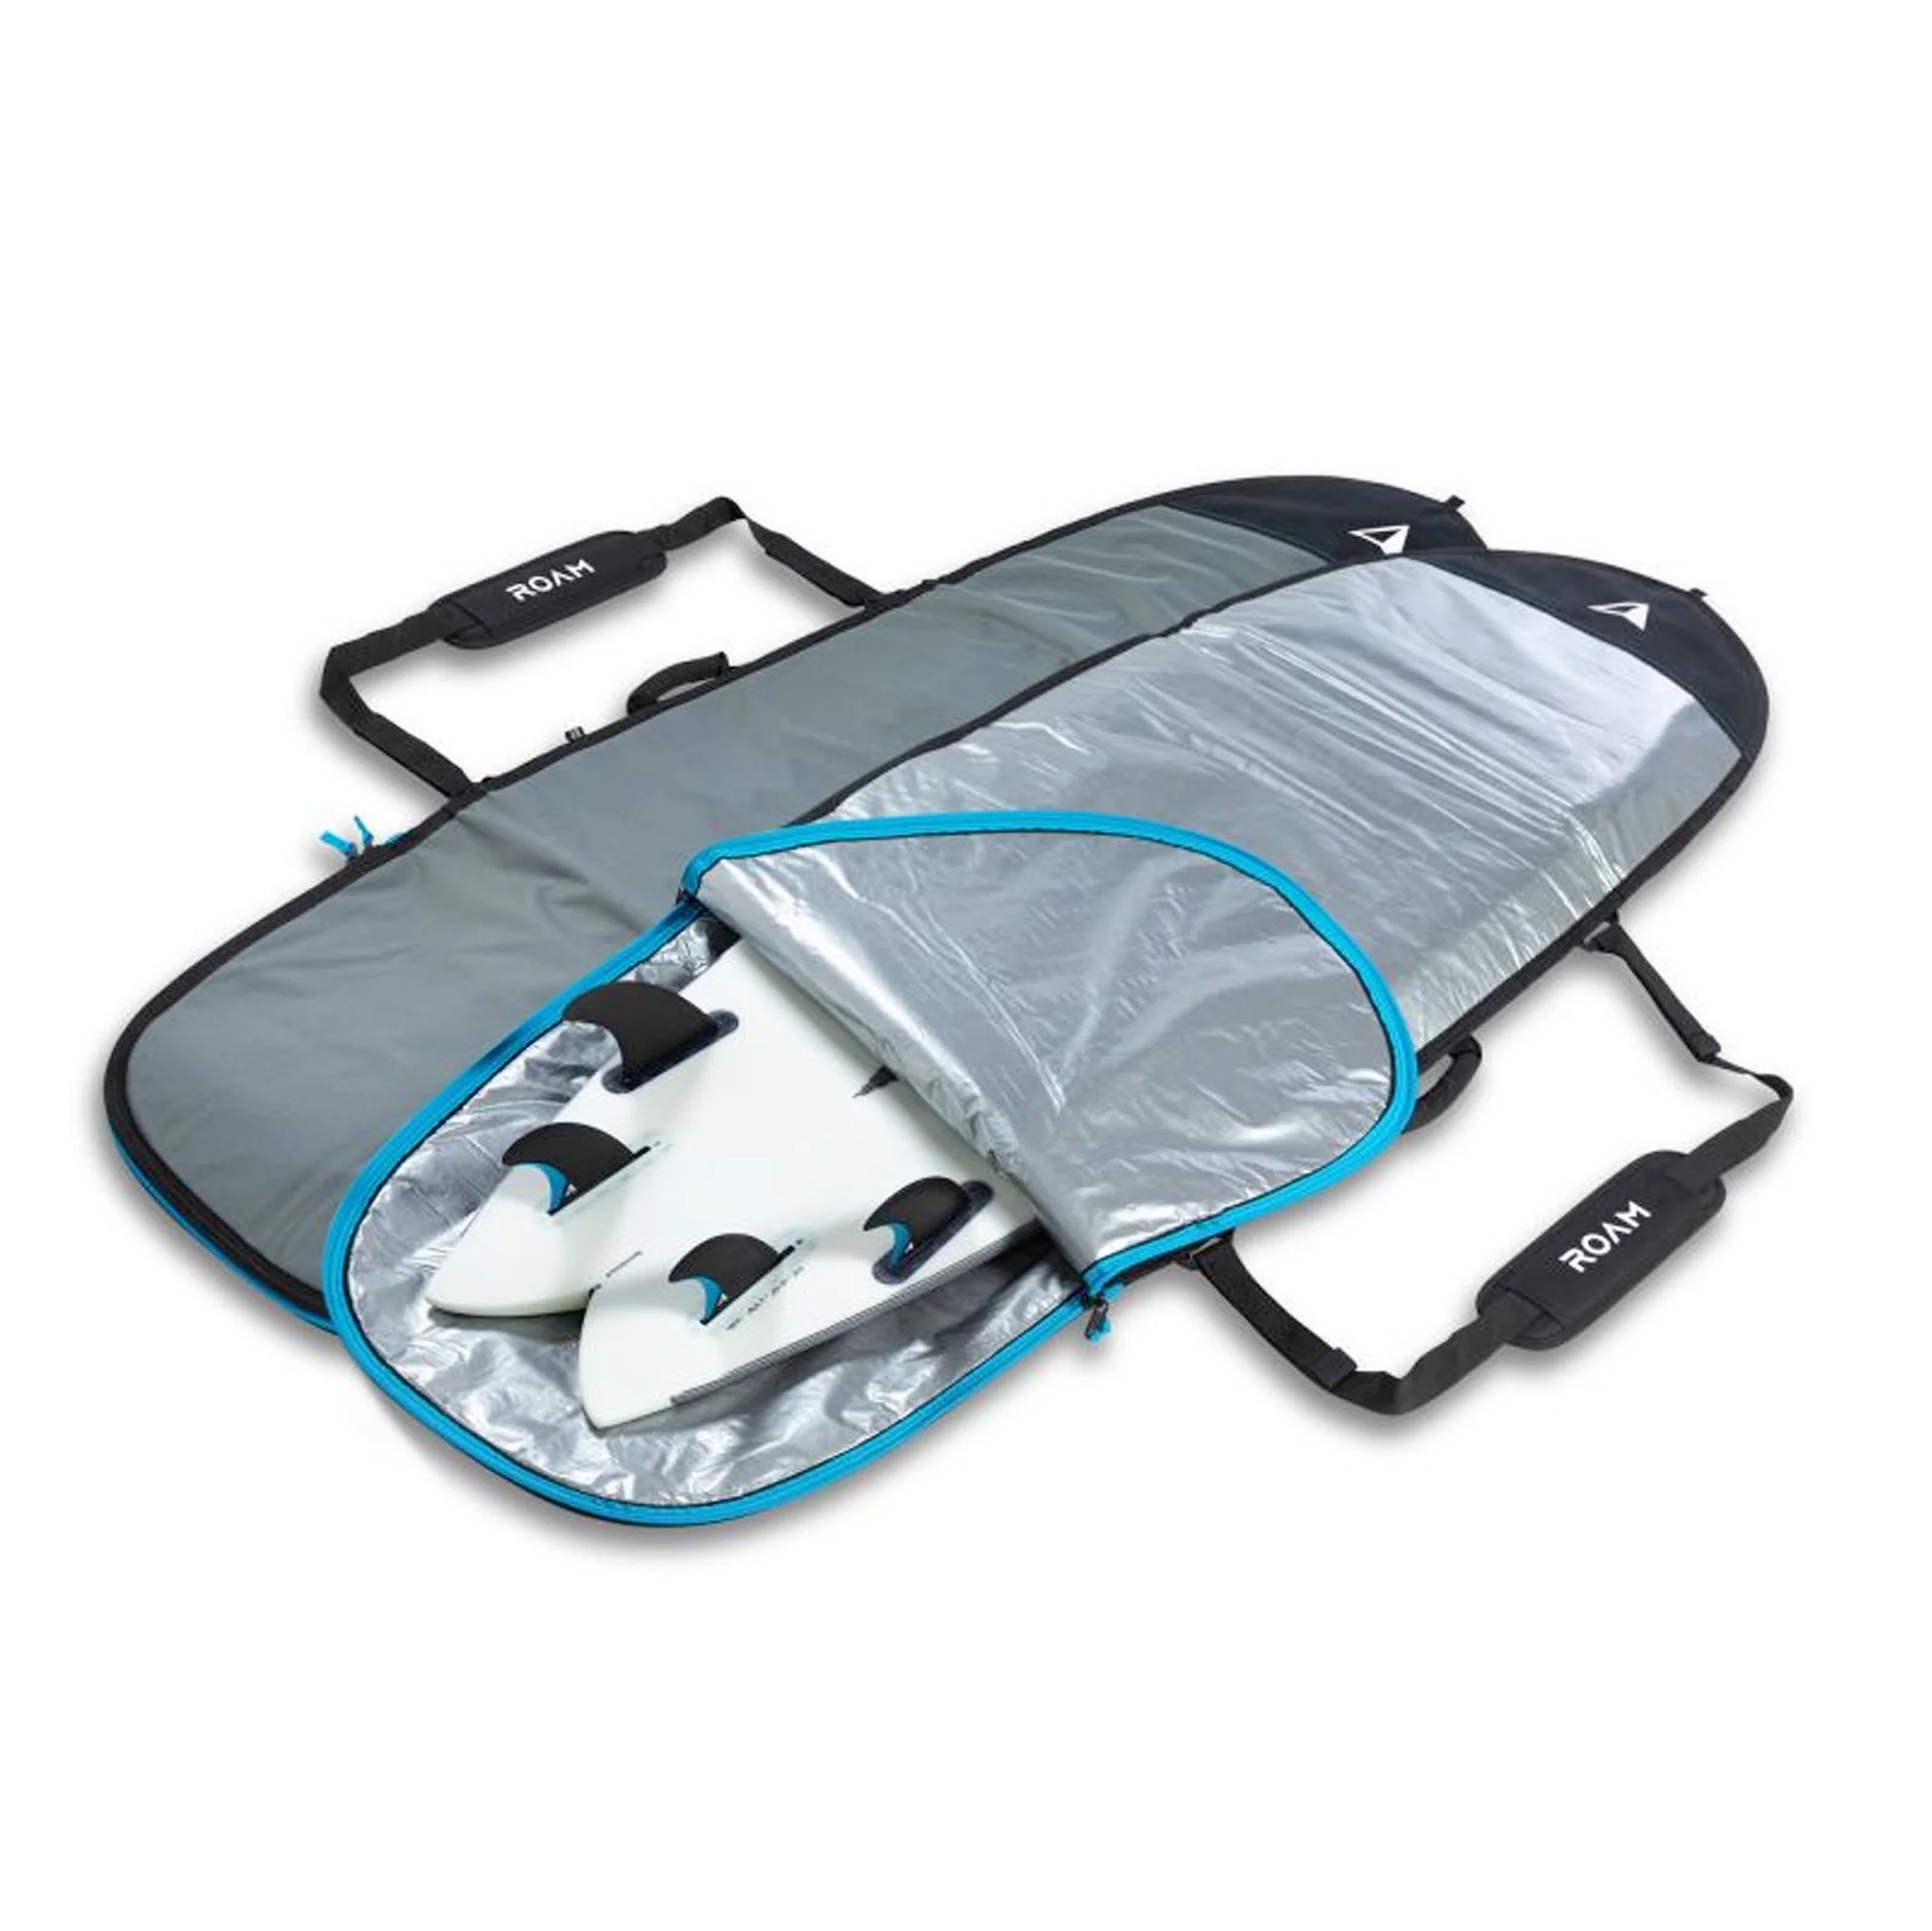 Roam Daylight Plus Board Bag Cover surfboard bag 5'8 Hybrid Daylight Plus